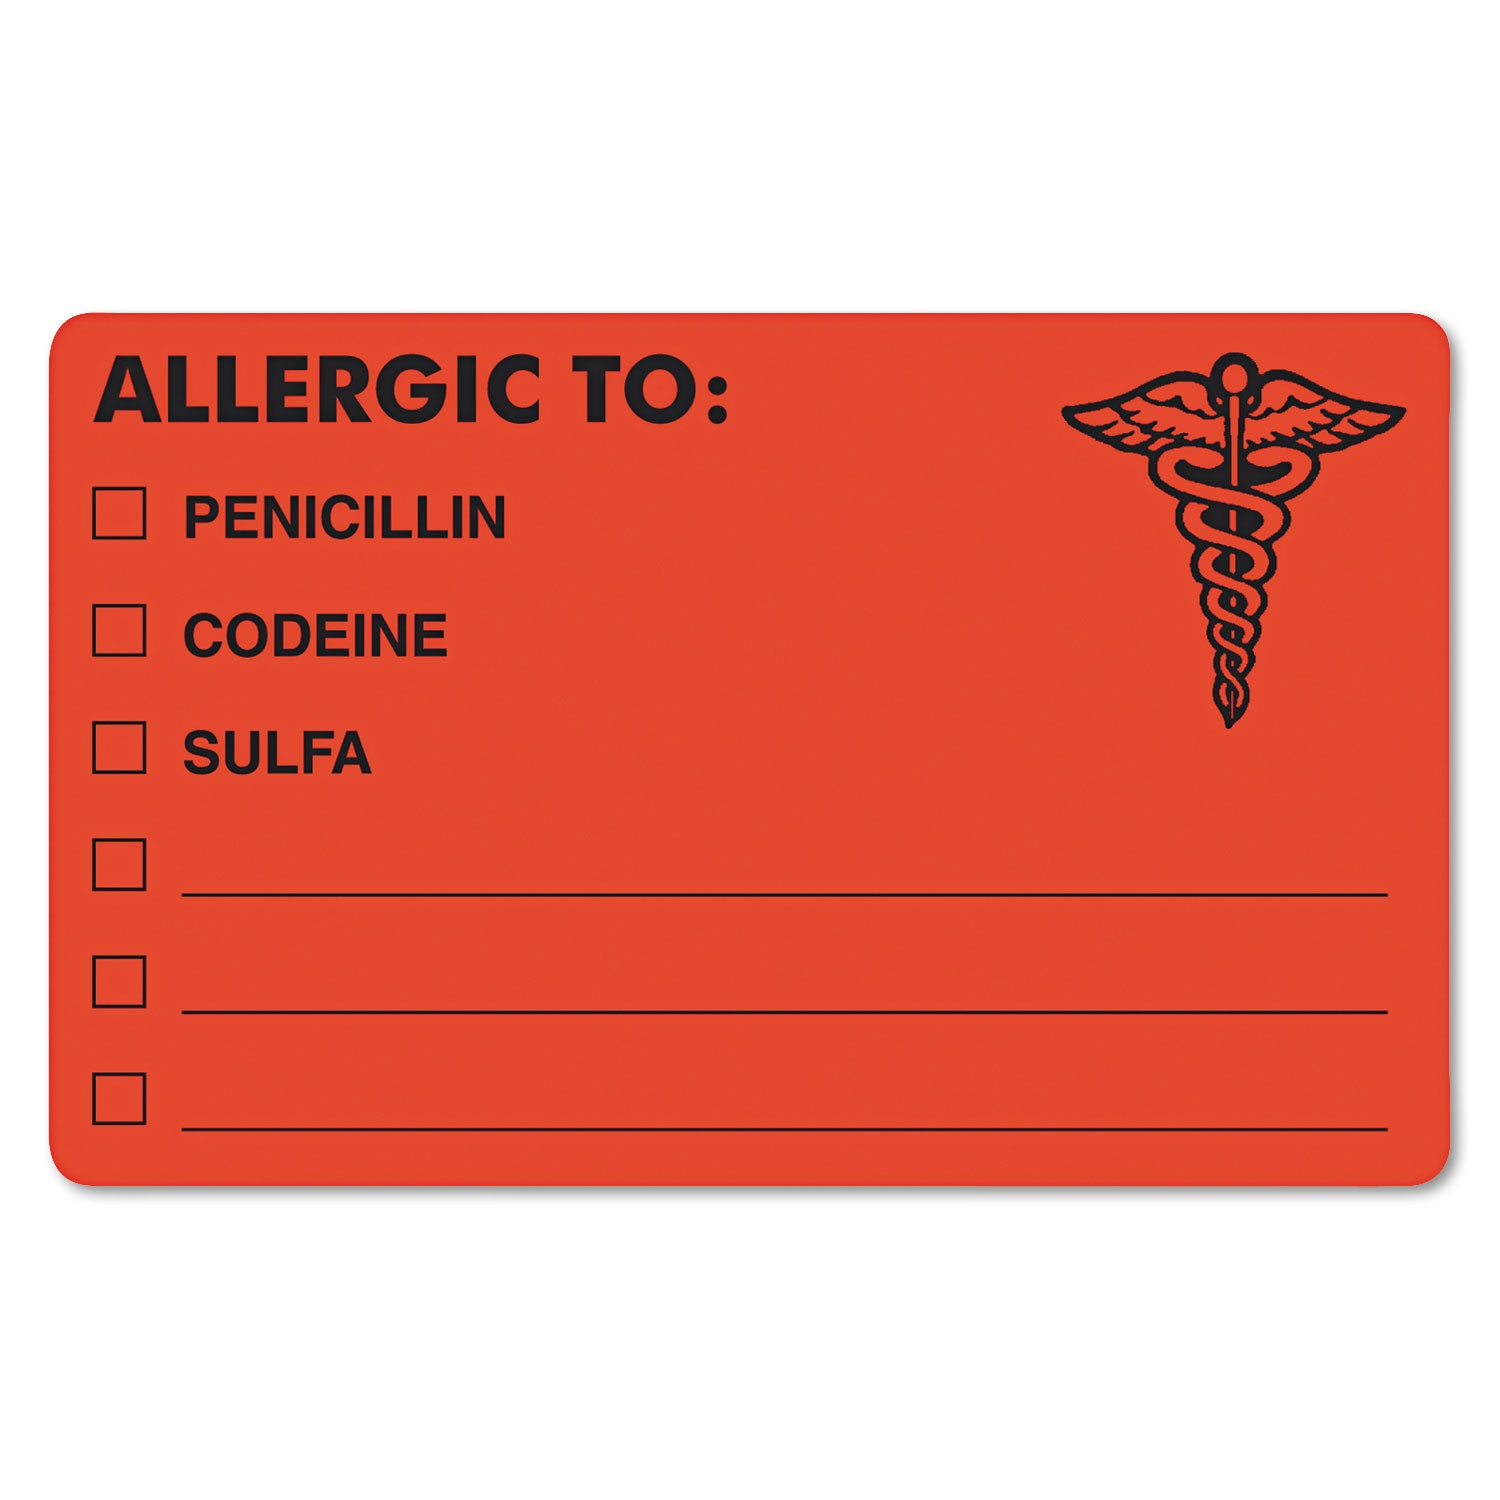 Allergy Warning Labels, ALLERGIC TO: PENICILLN, CODEINE, SULFA, 2.5 x 4, Fluorescent Red, 100/Roll - 